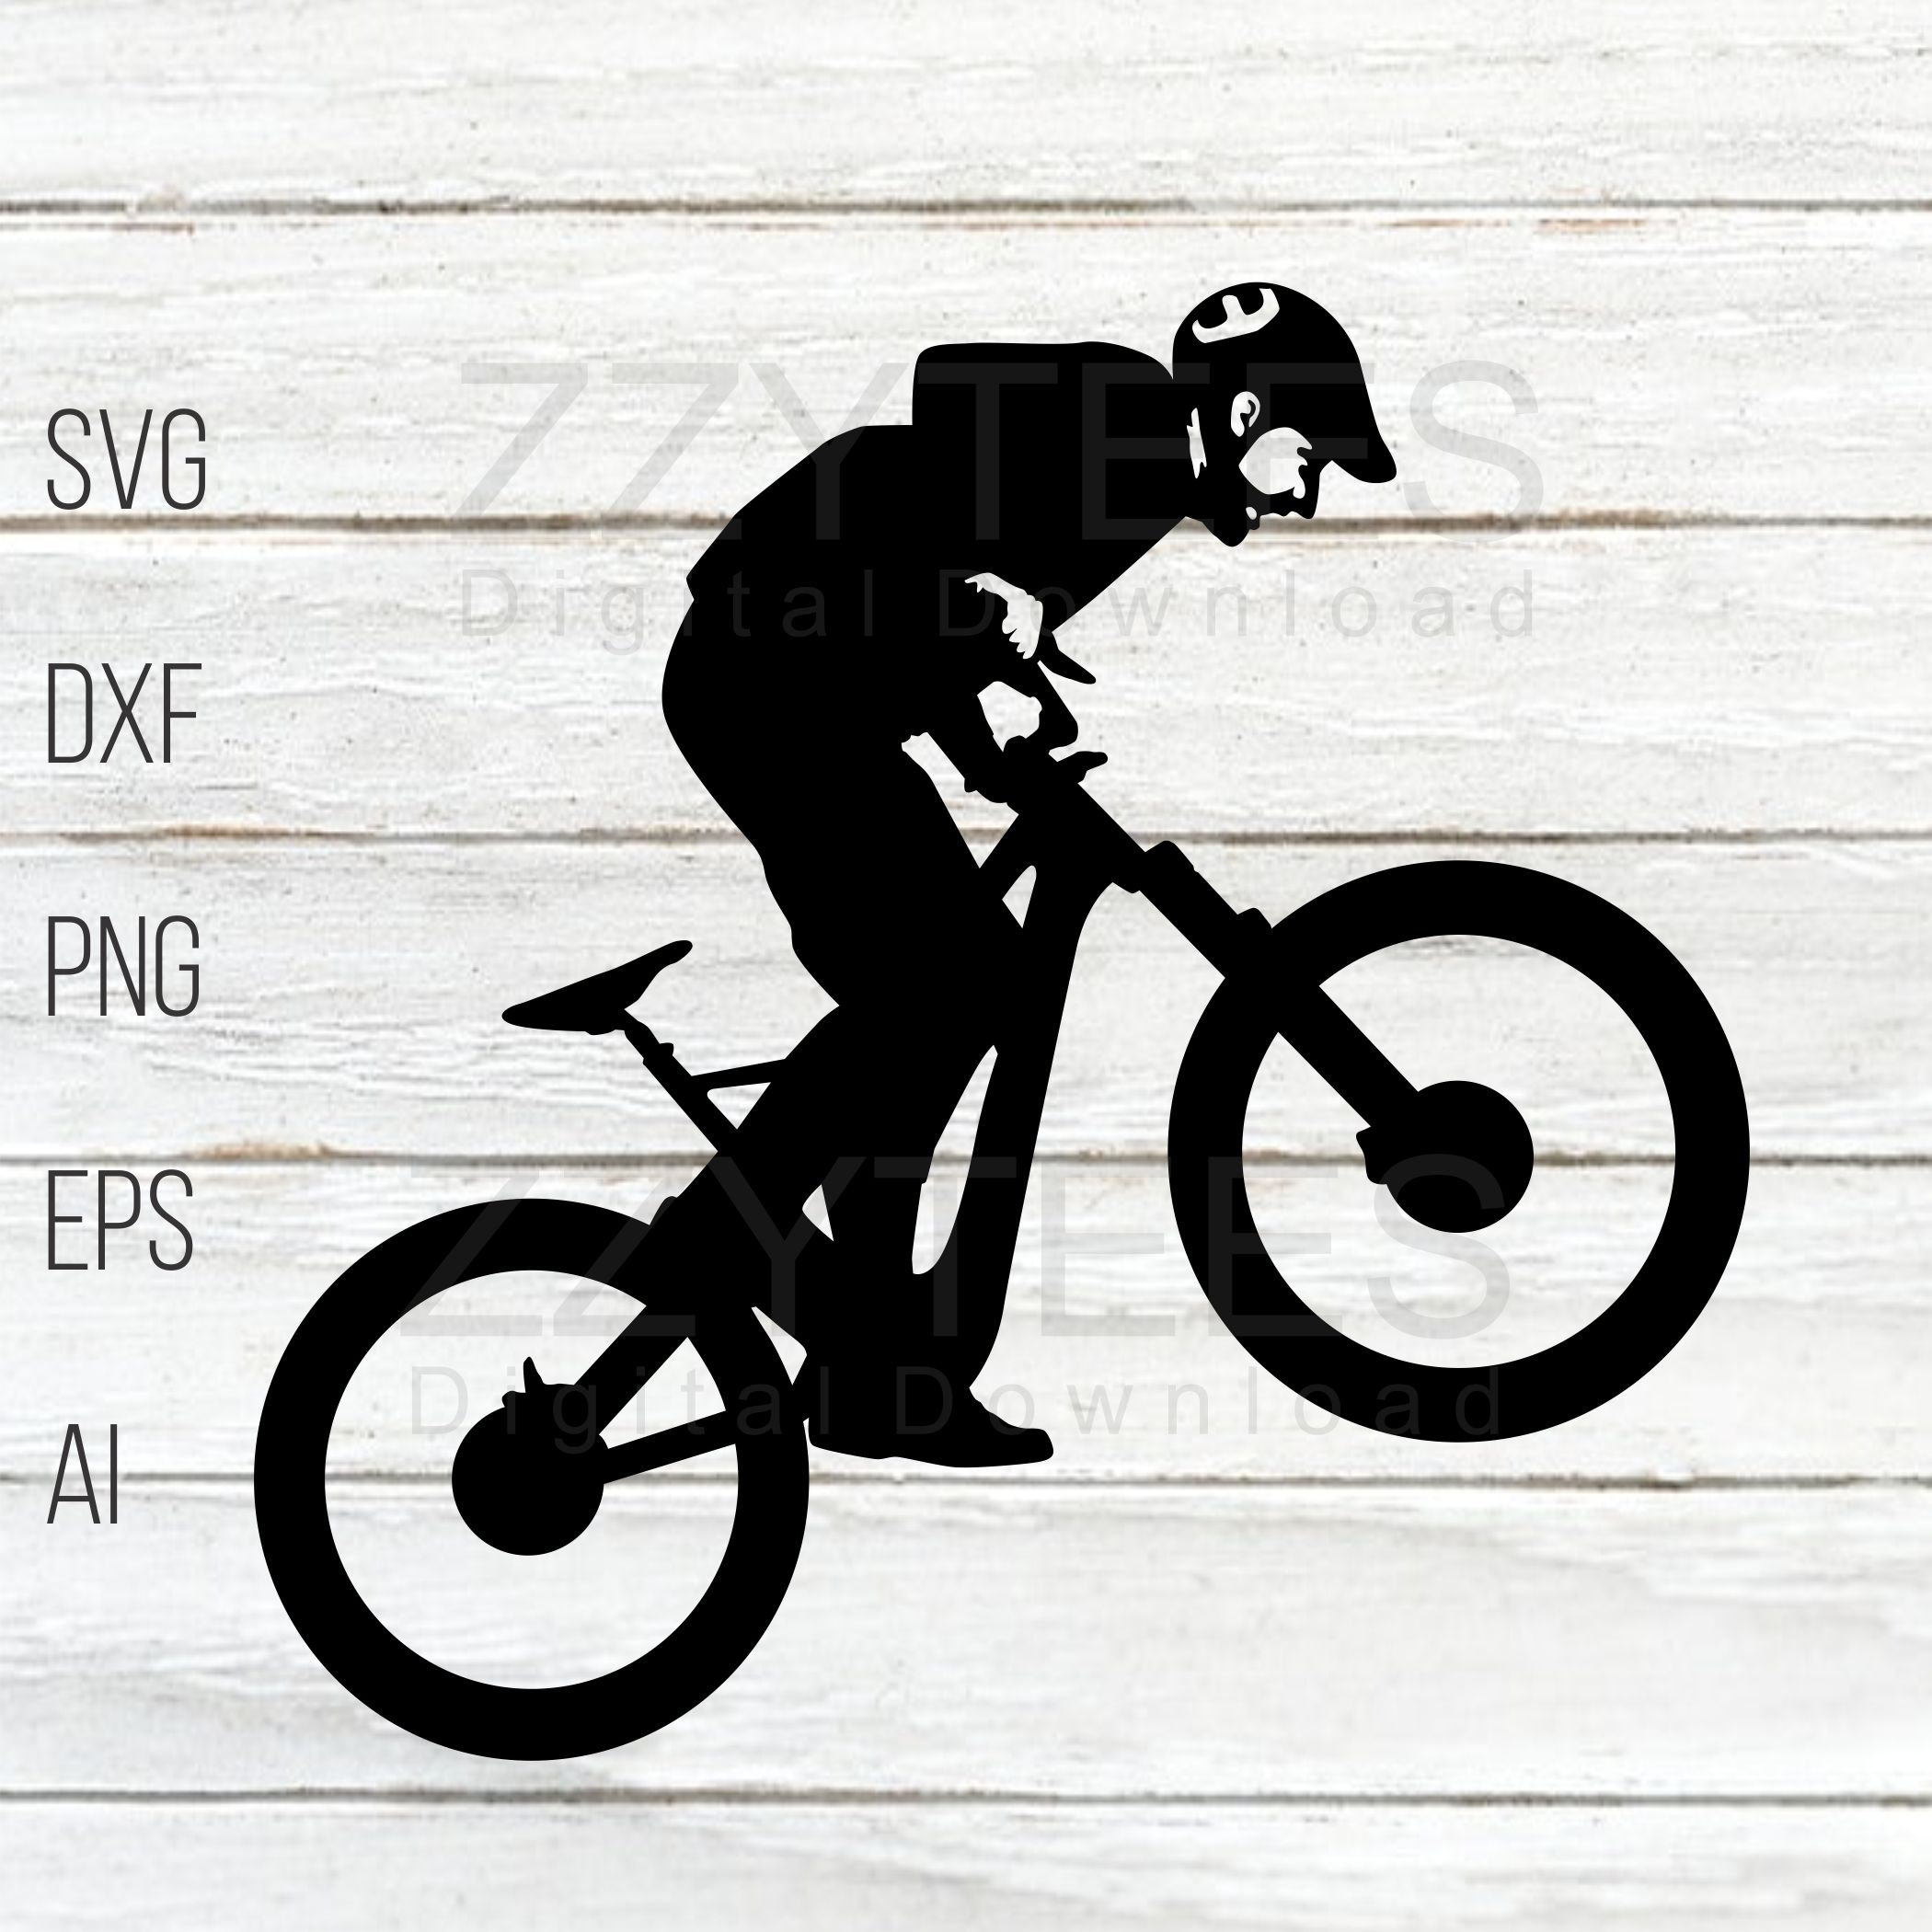 Chemicaliën Verdwijnen oneerlijk Mountain Bike Silhouette MTB Design Mountain Bike SVG - Etsy